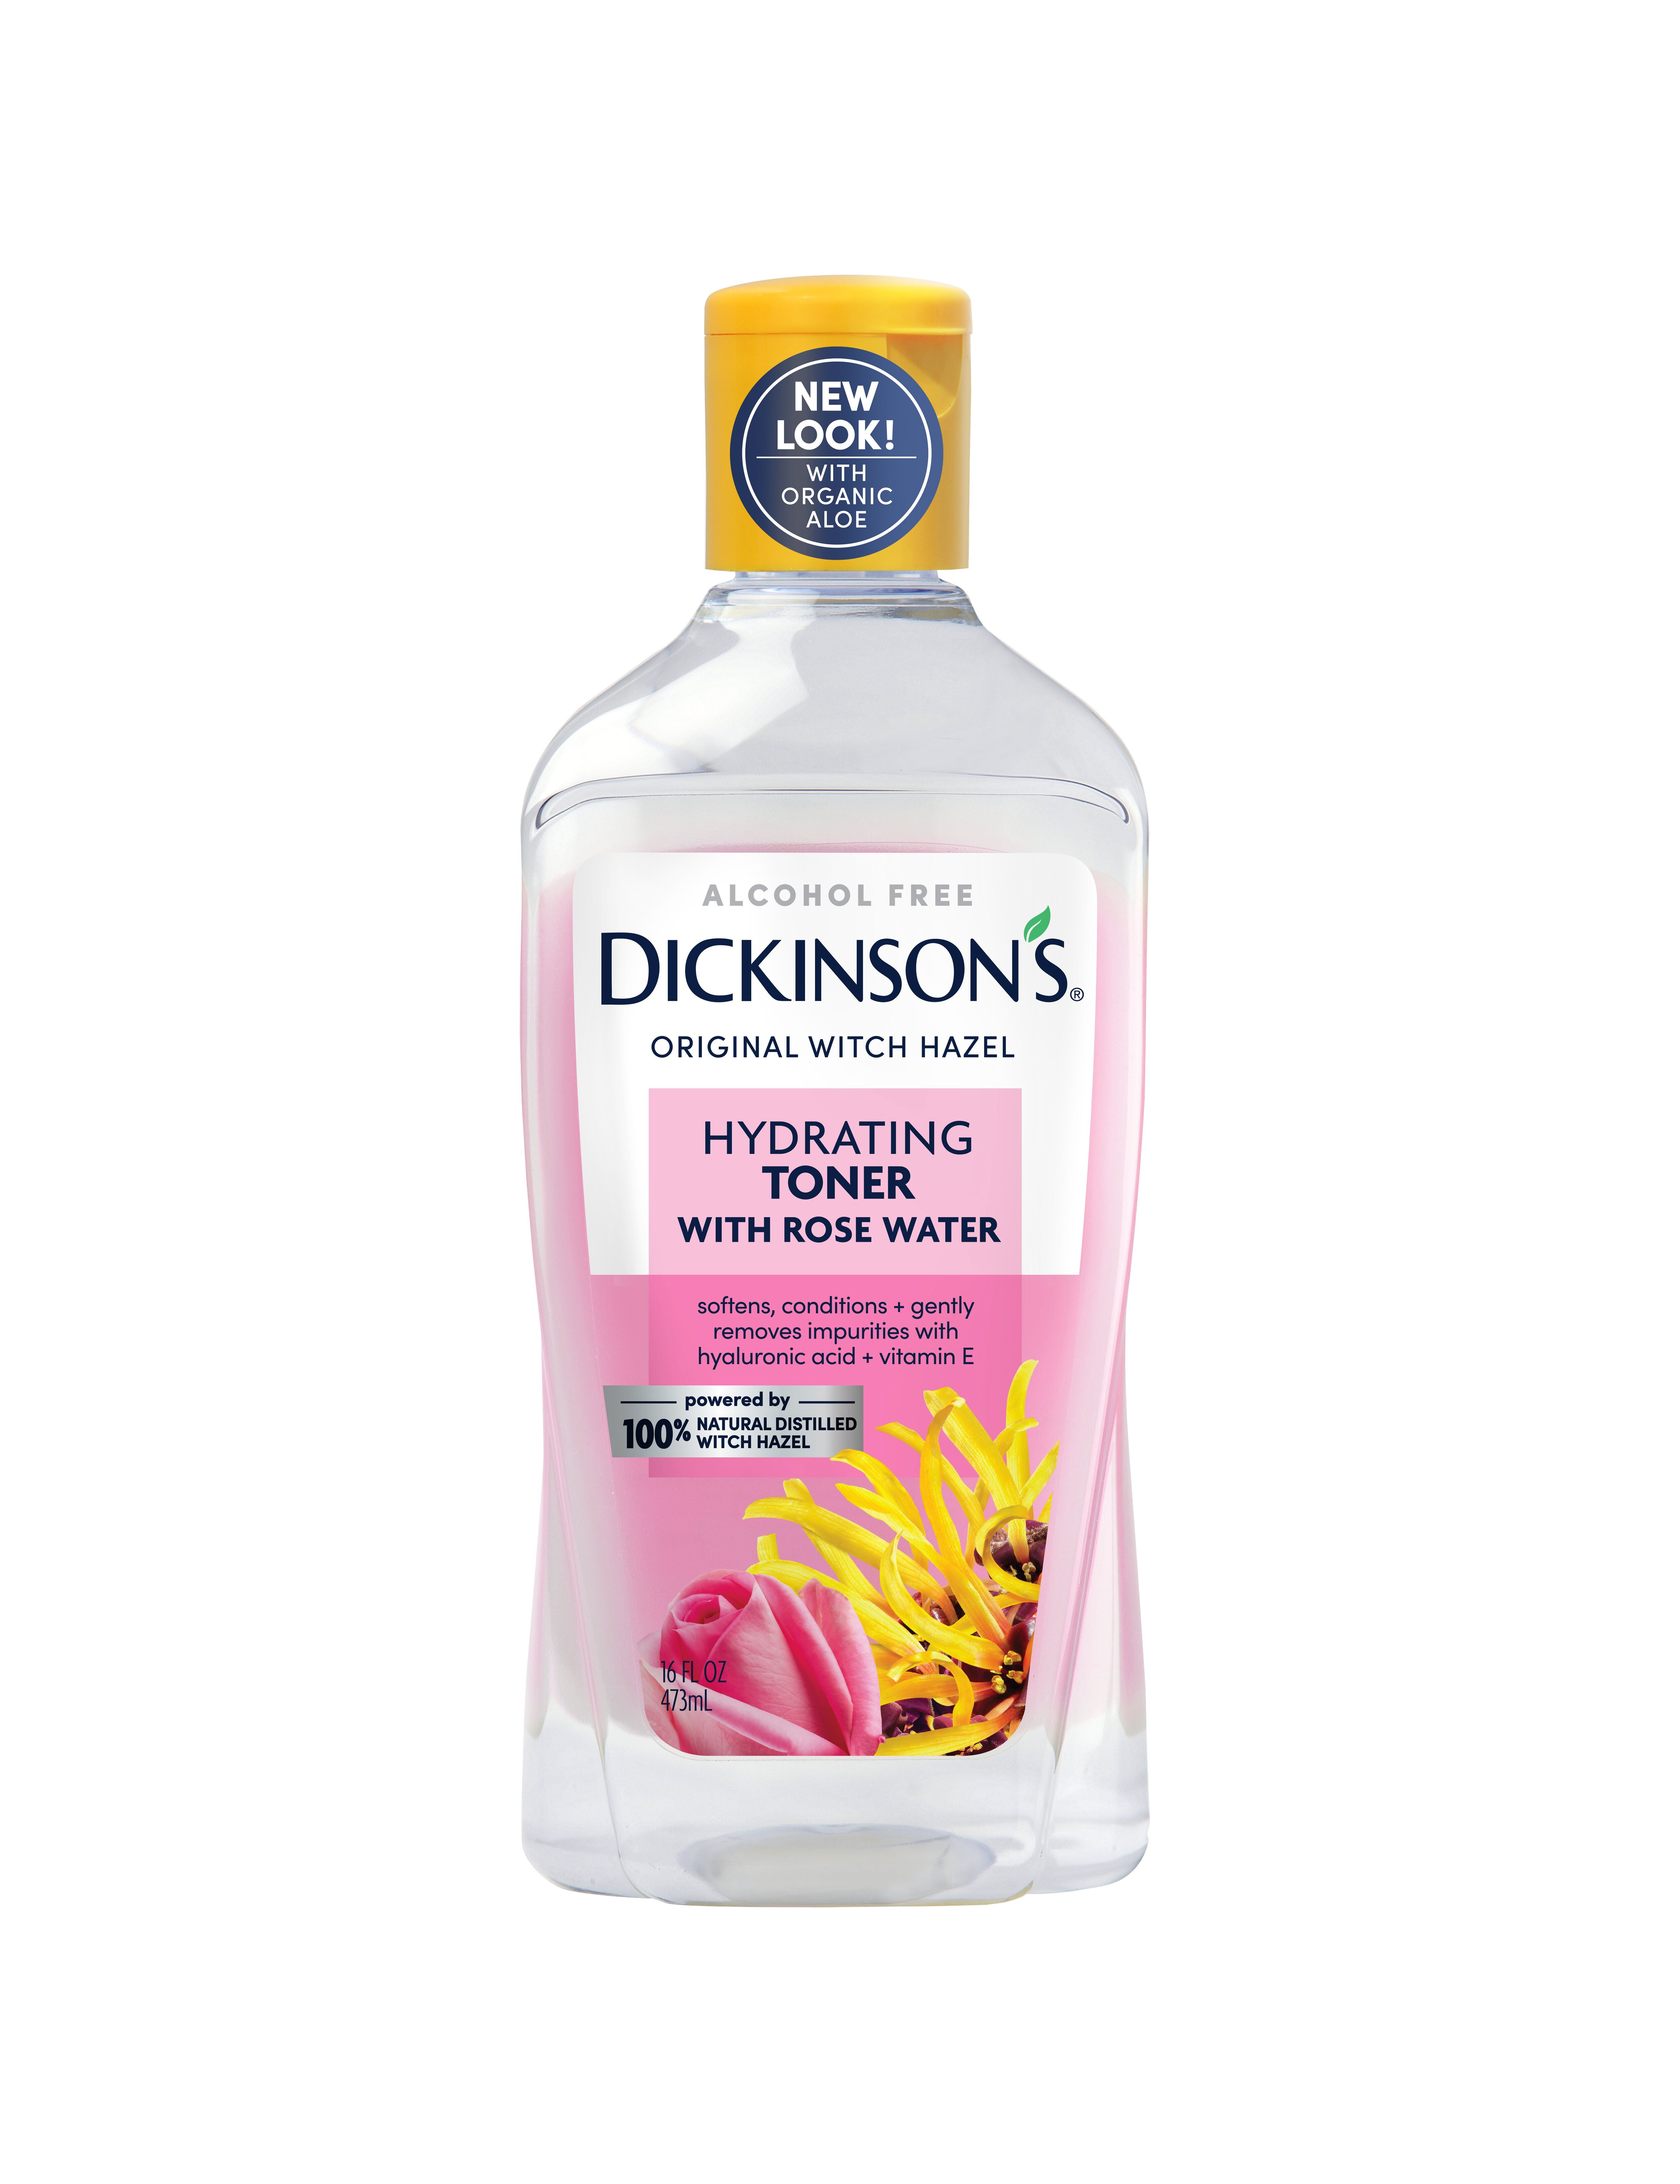 Dickinson's Enhanced Witch Hazel Alcohol Free Hydrating Toner, 16 OZ